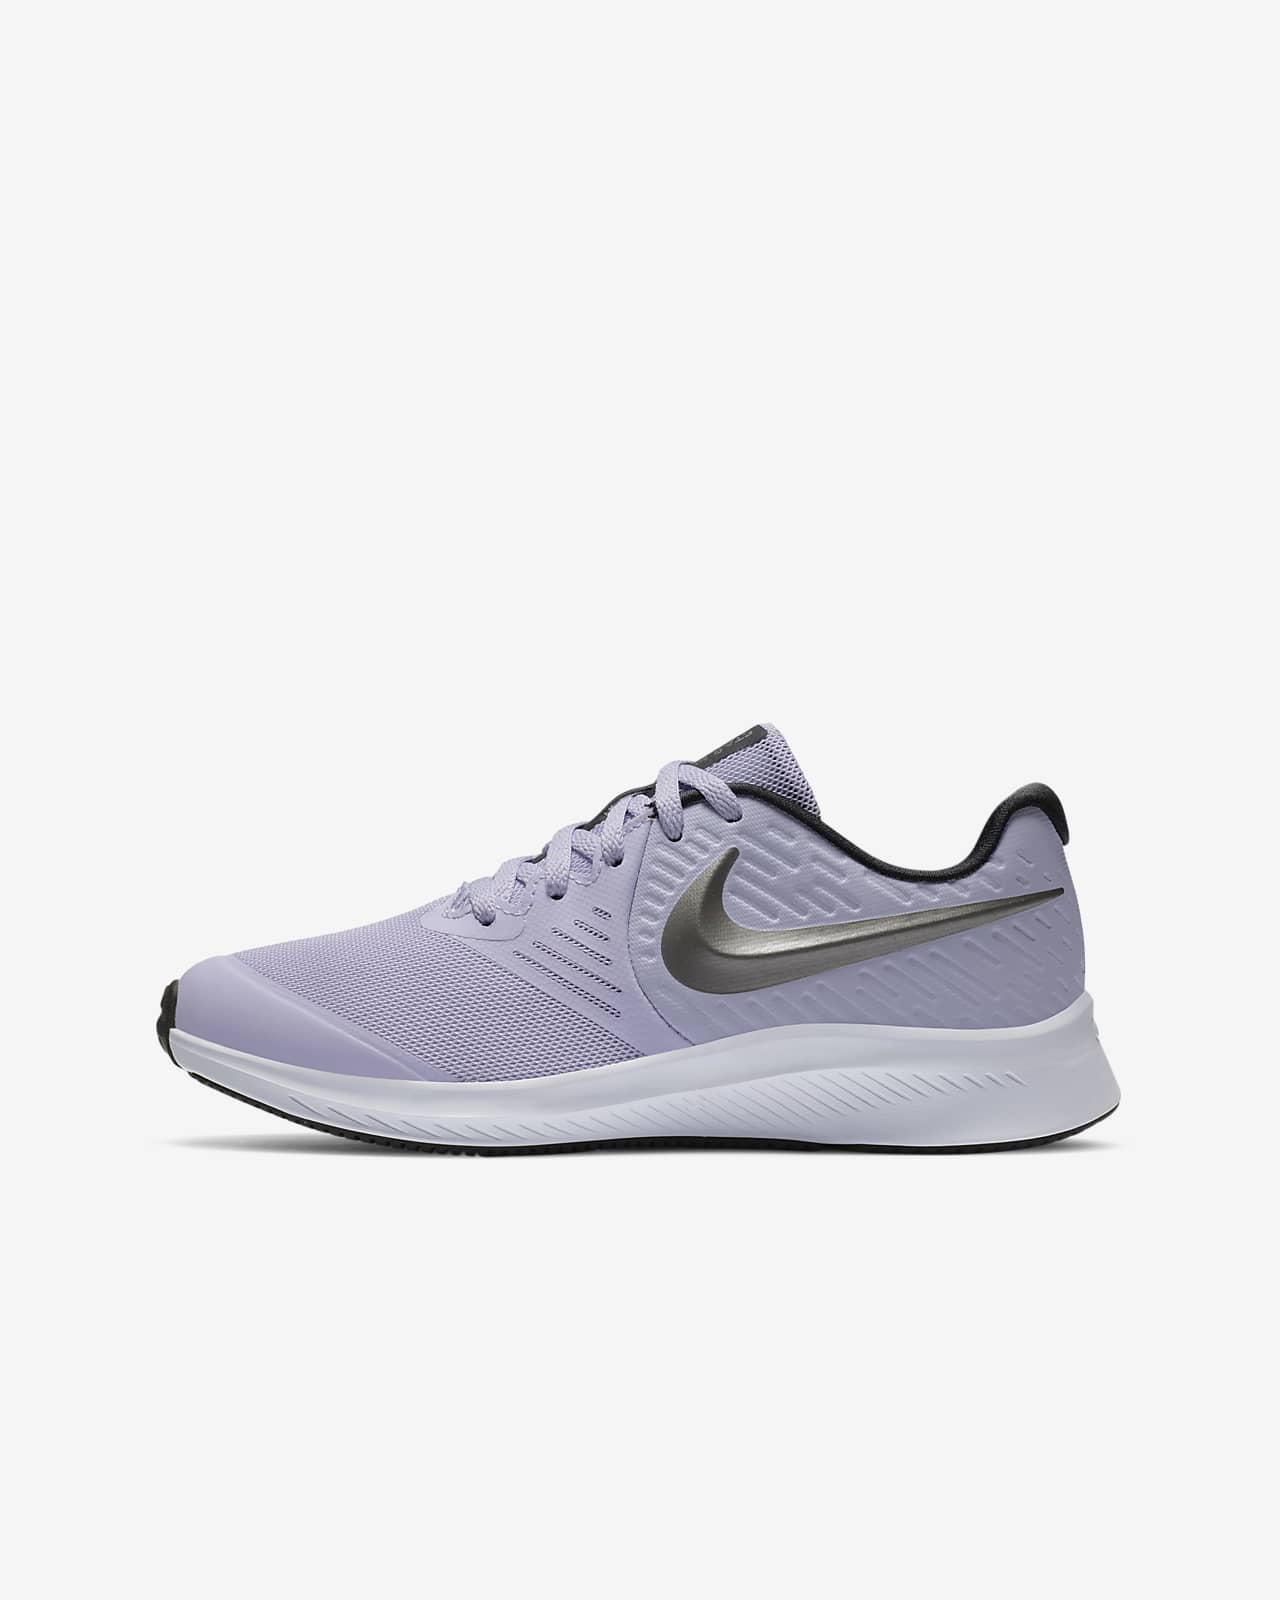 grey tennis shoes nike